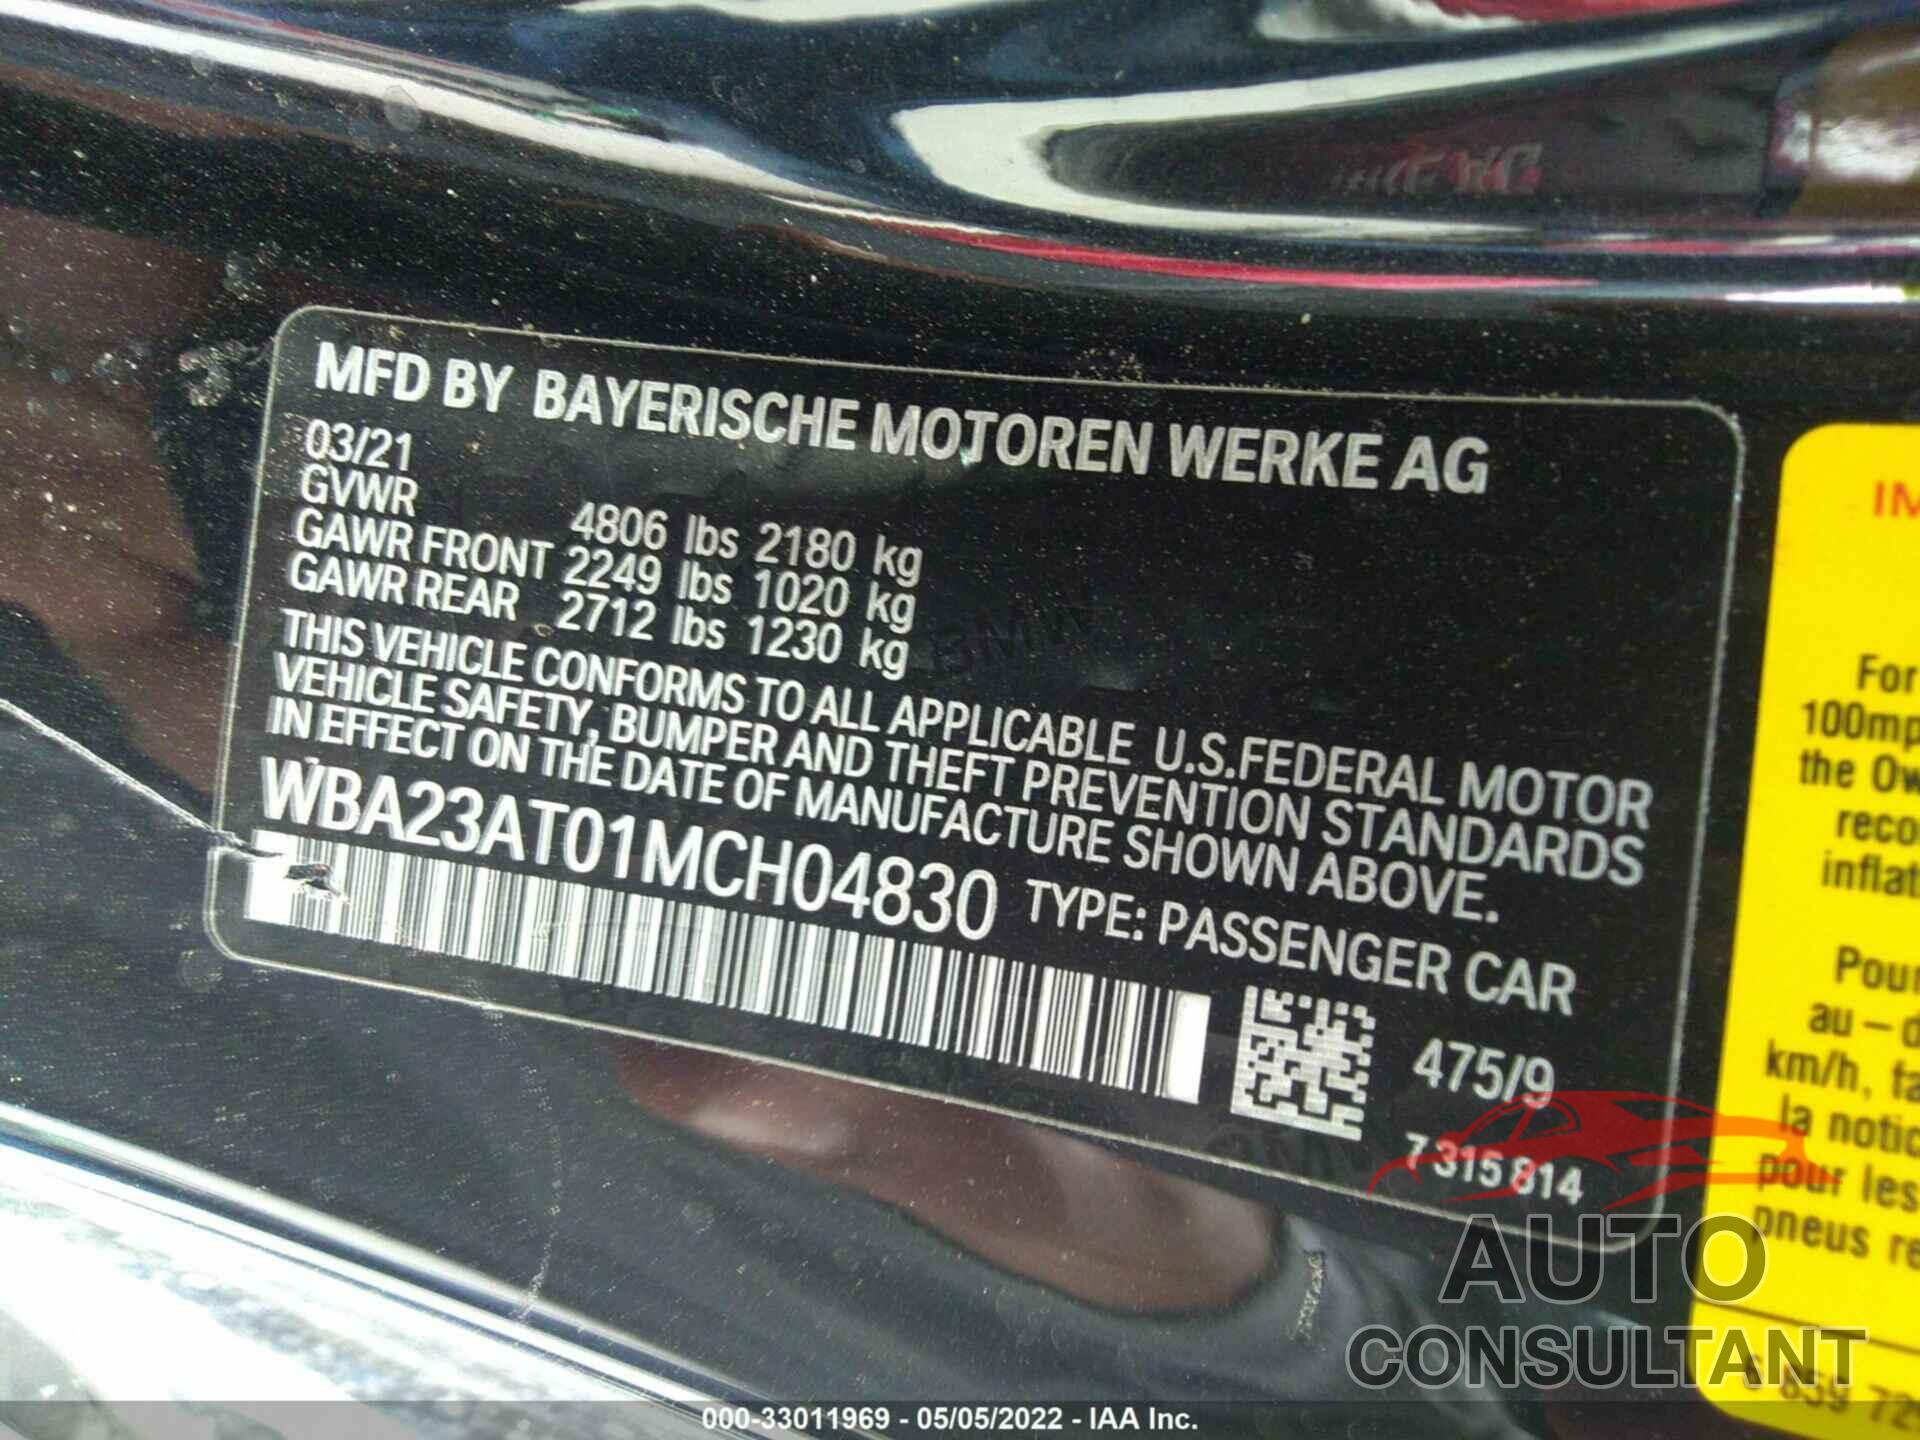 BMW 4 SERIES 2021 - WBA23AT01MCH04830